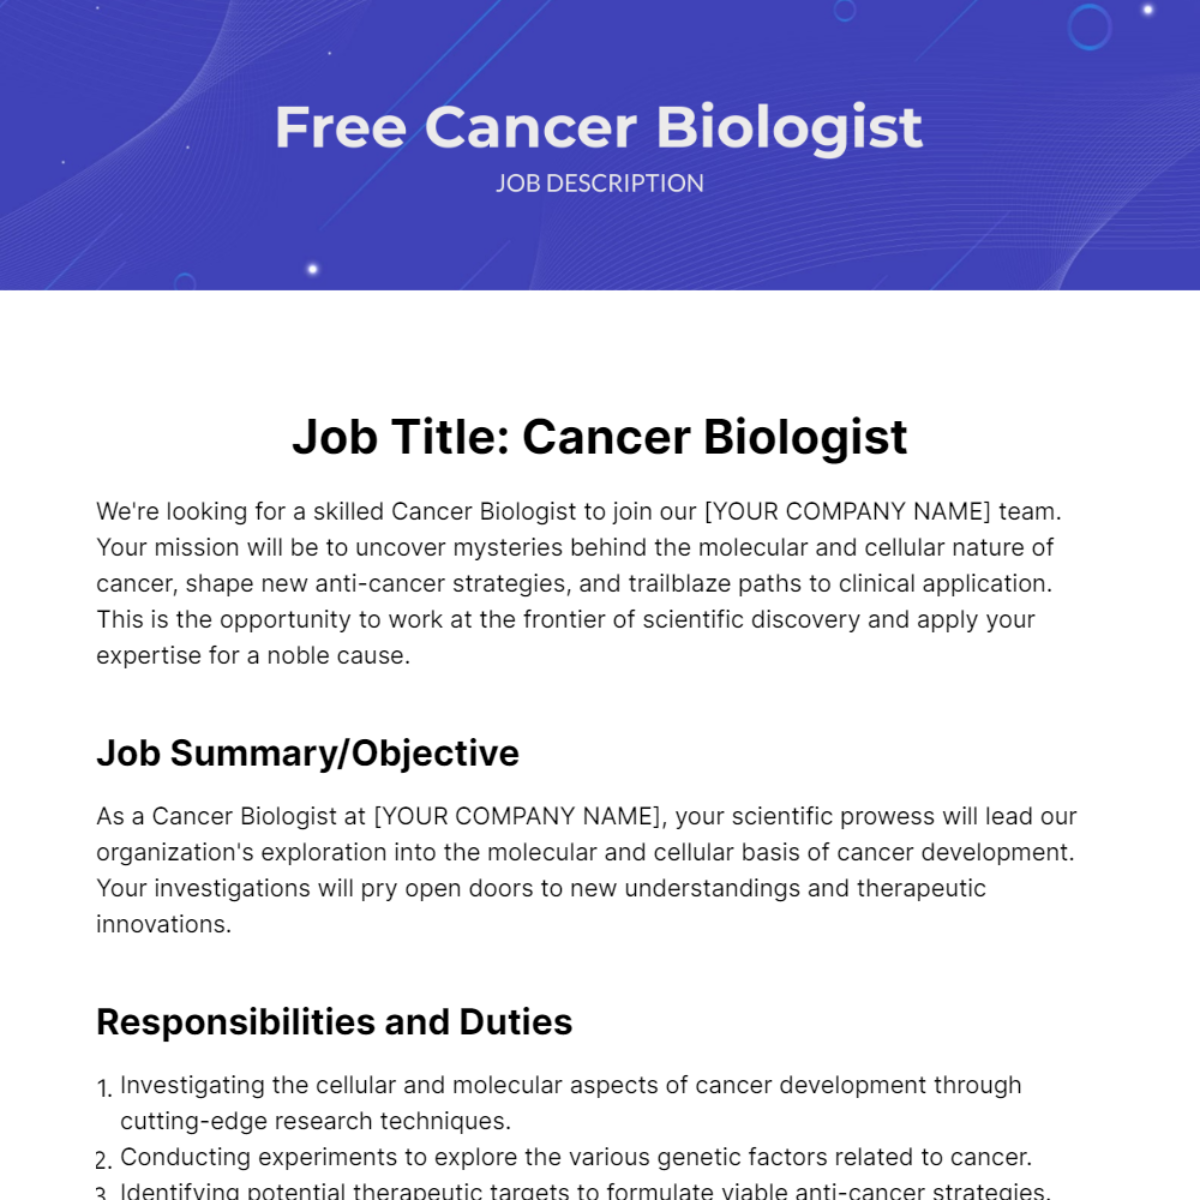 Free Cancer Biologist Job Description Template